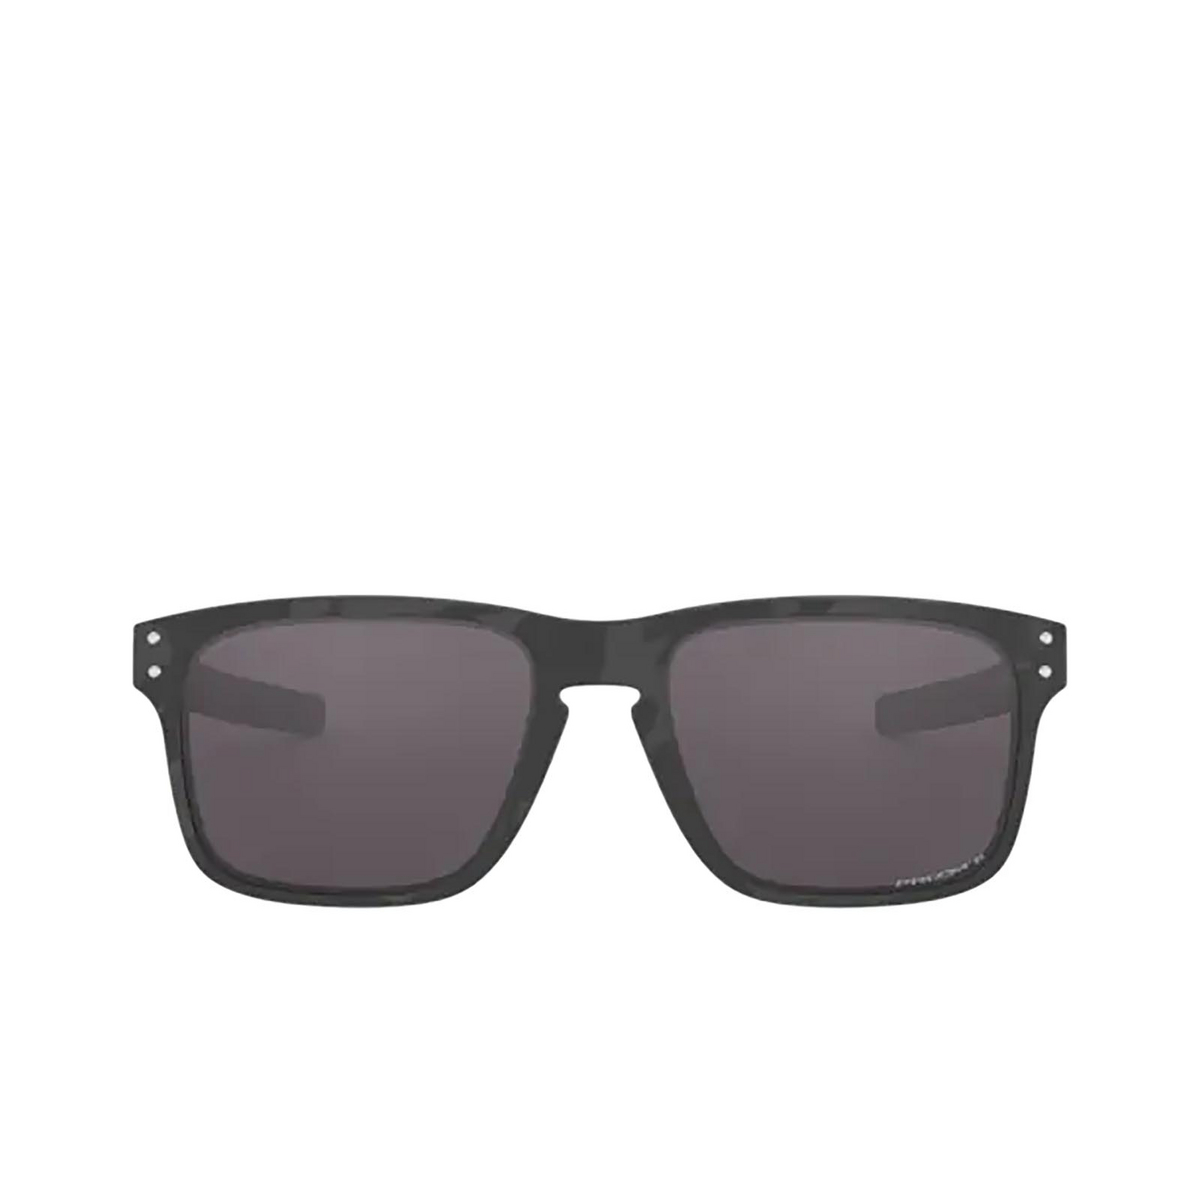 Oakley HOLBROOK MIX Sunglasses 938419 Matte Black Camo - front view